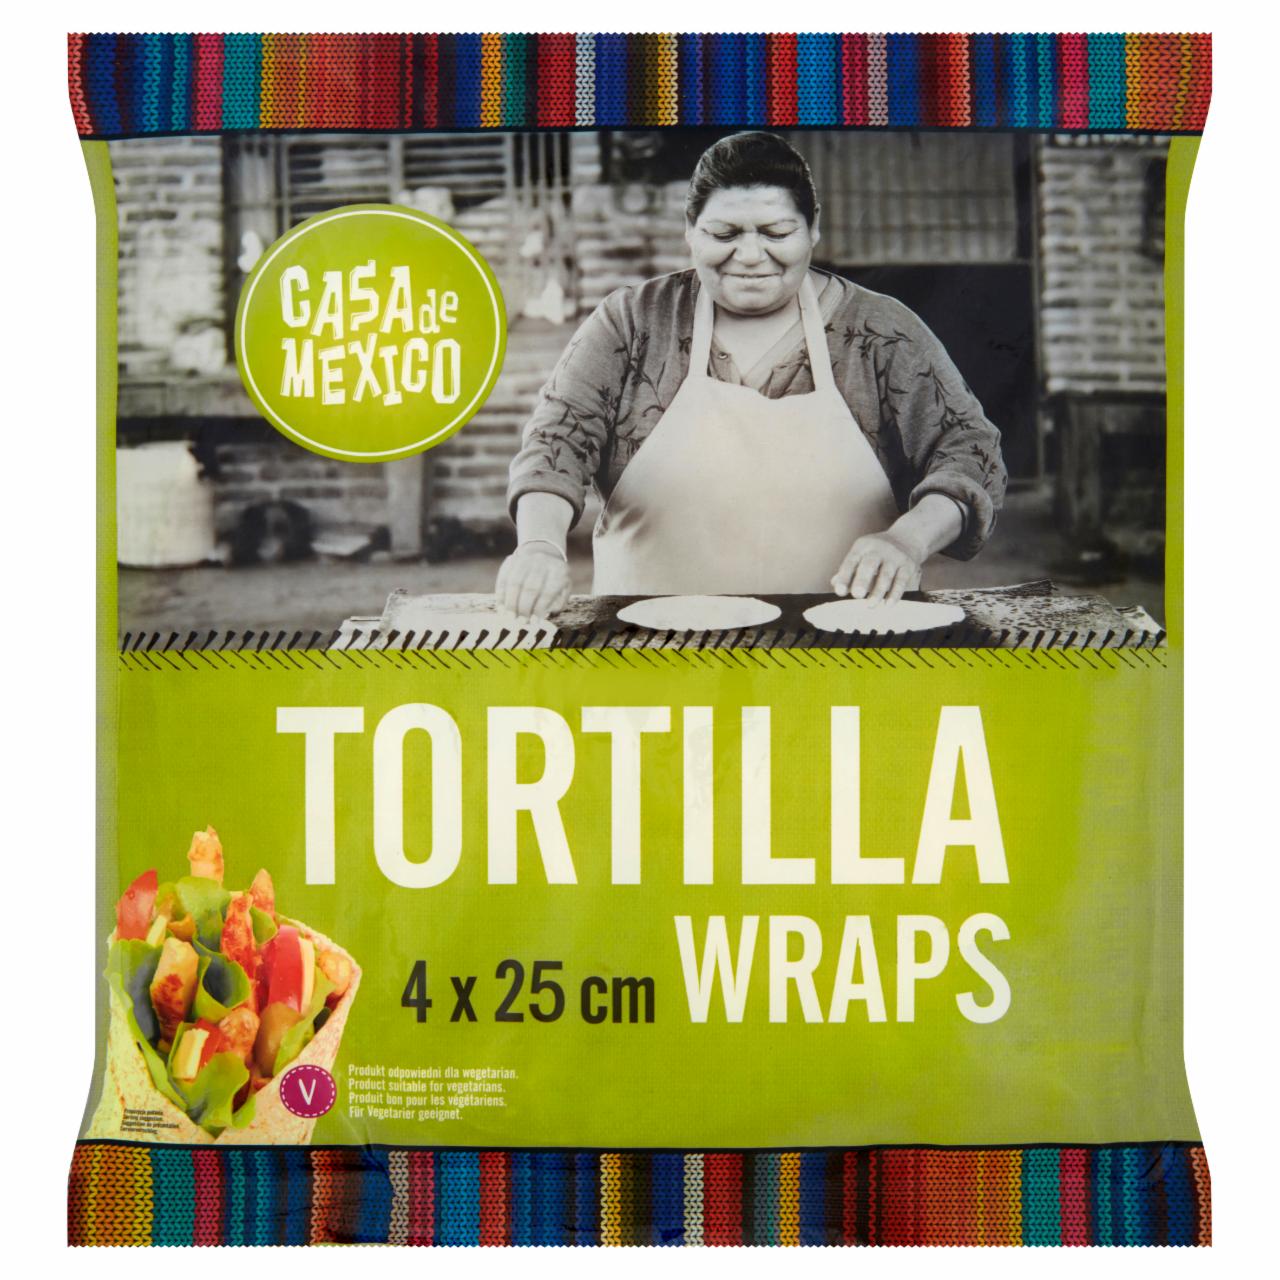 Zdjęcia - Tortilla wraps Casa de Mexico